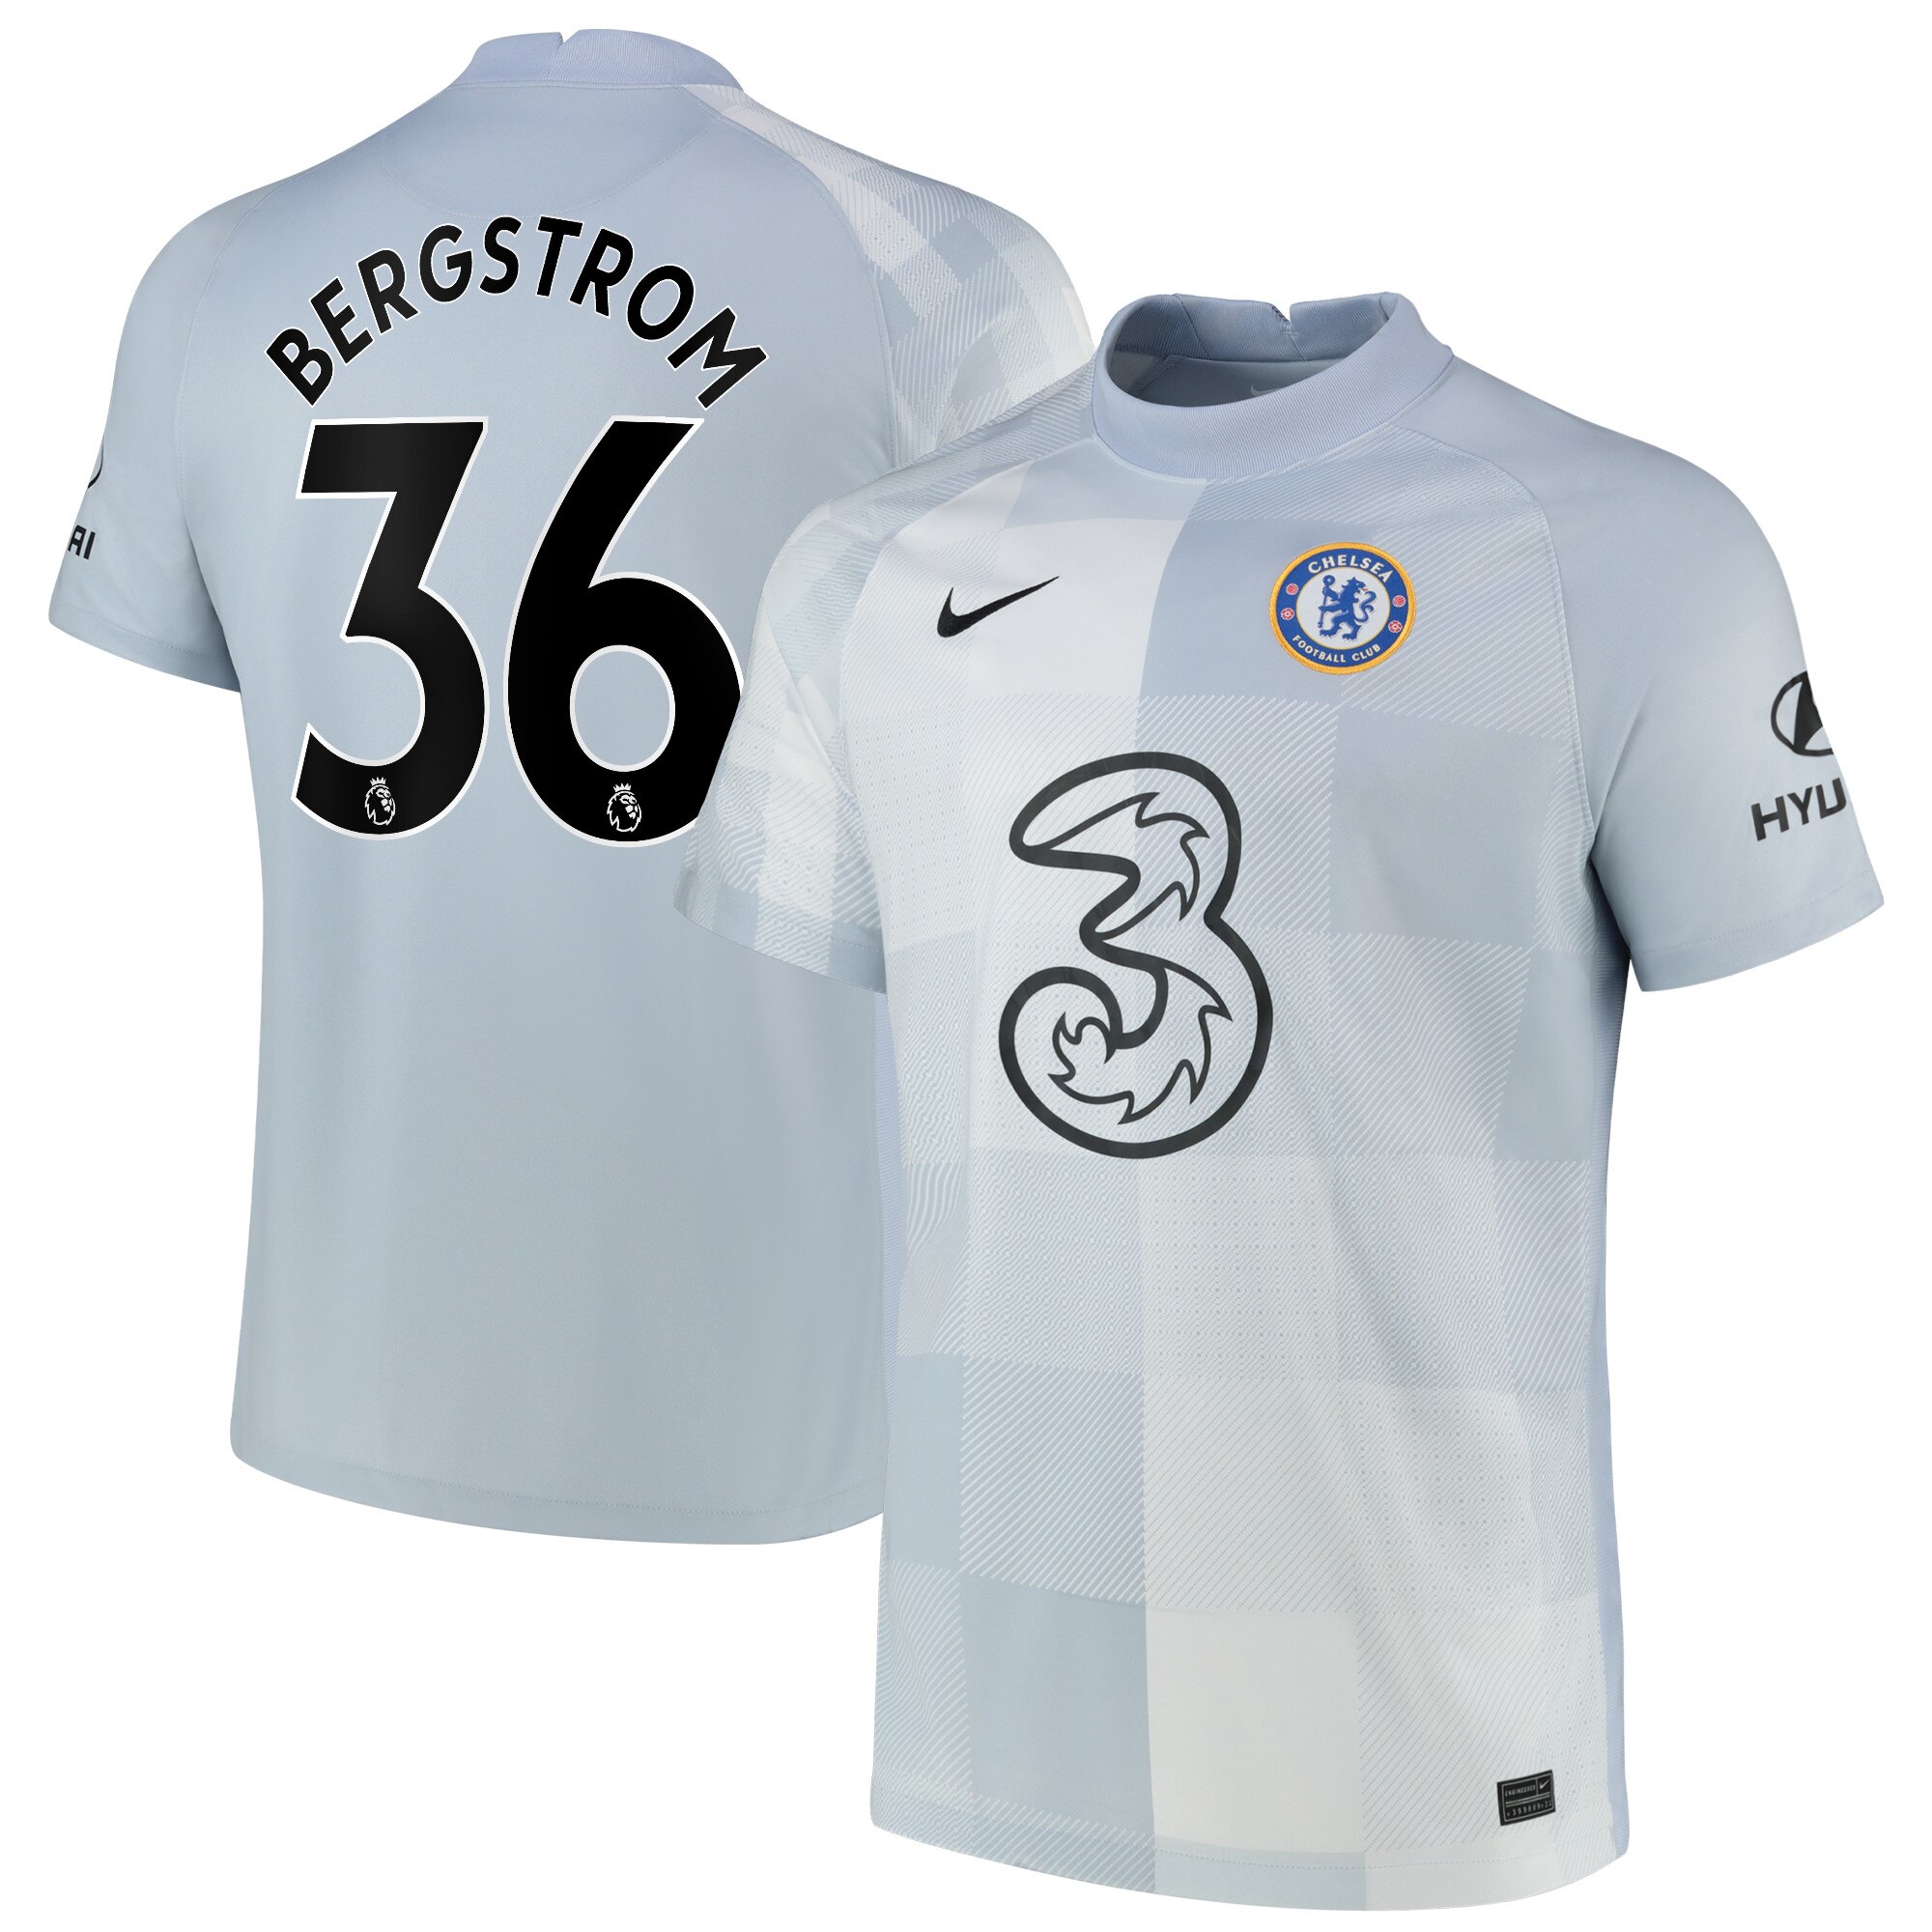 Chelsea Goalkeeper Stadium Shirt 2021-22 with Bergstrom 36 printing